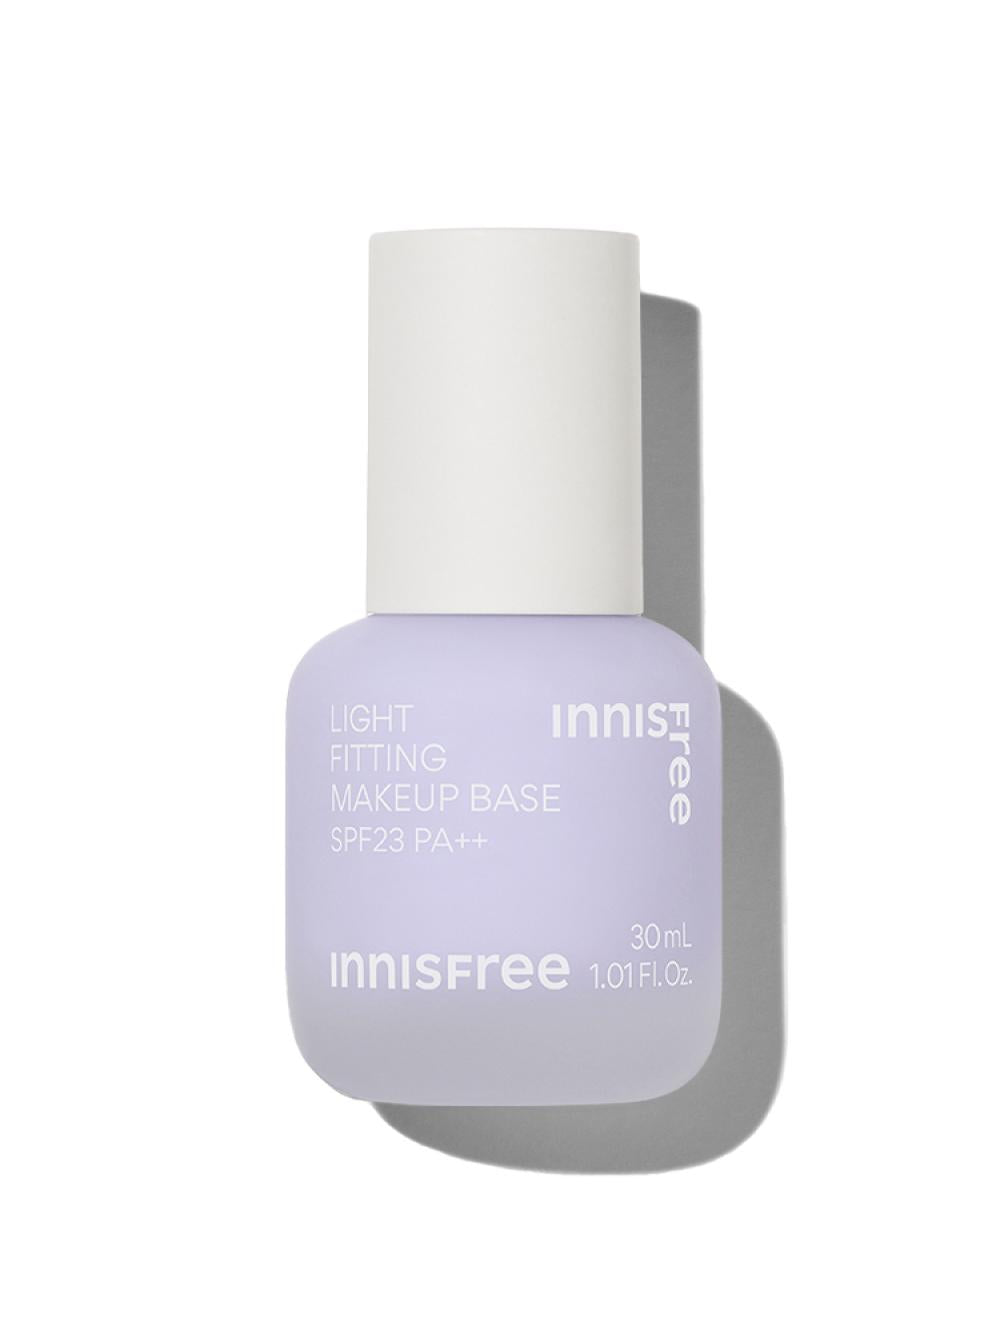 [INNISFREE] Light Fitting Make up Base SPF 23 PA++ 30ml  (Purple) - Enrapturecosmetics